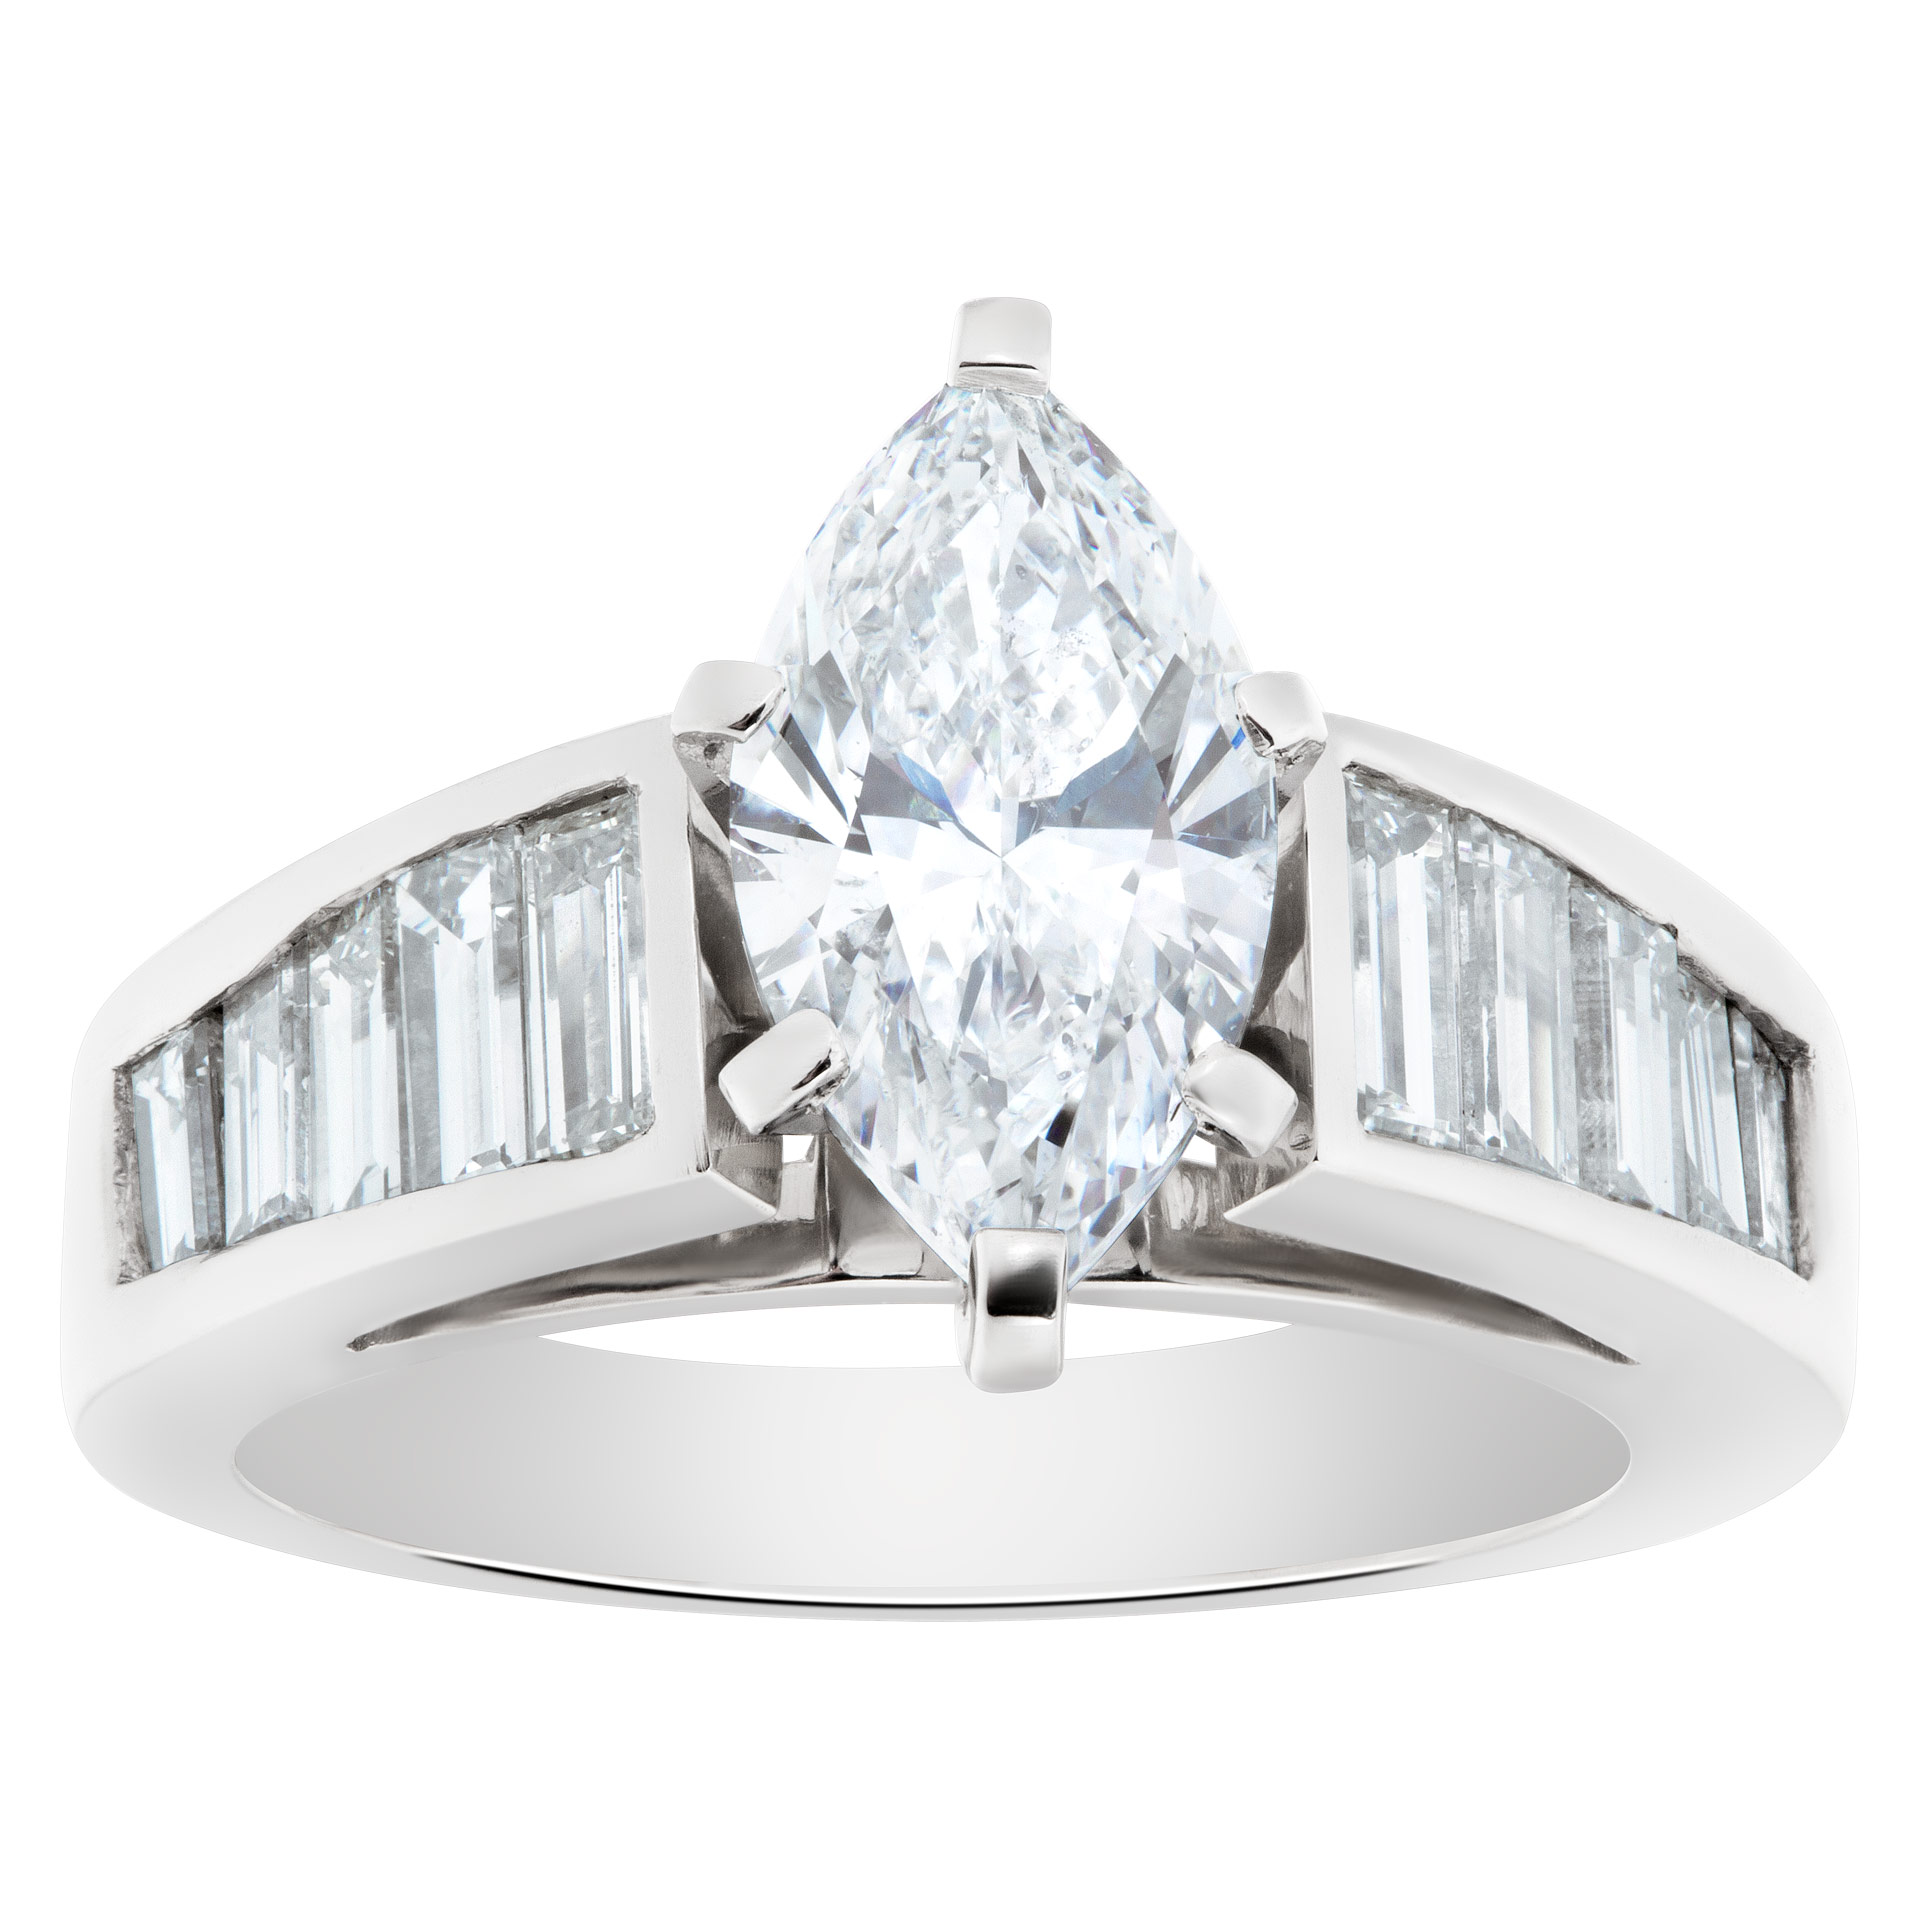 GIA certified marquise brilliant cut diamond 1.53 carat (D color, SI1 clarity) set in platinum setting image 1